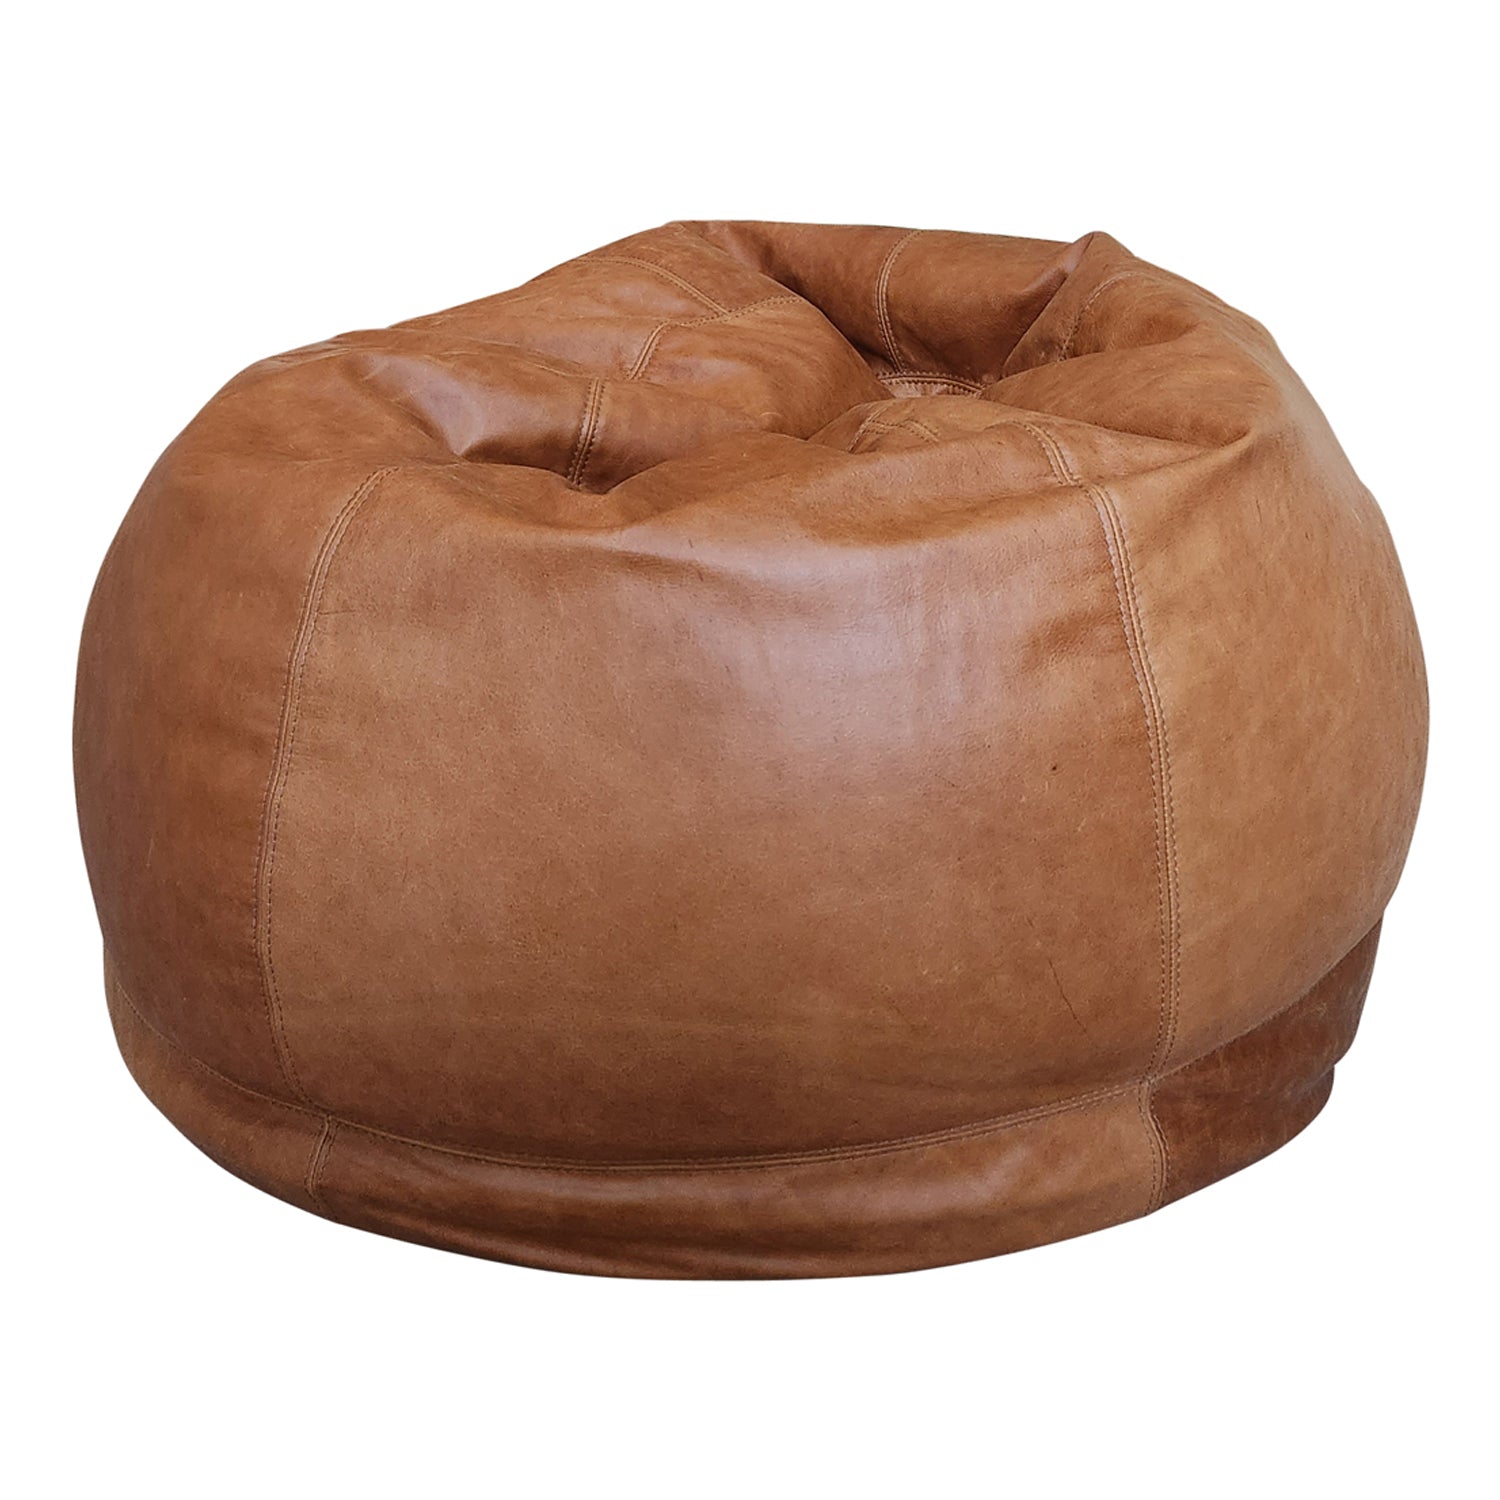 Tear Drop Pear Shape Leather Bean Bag Cover - China Bean Bag Chair Cover,  Leather Bean Bag